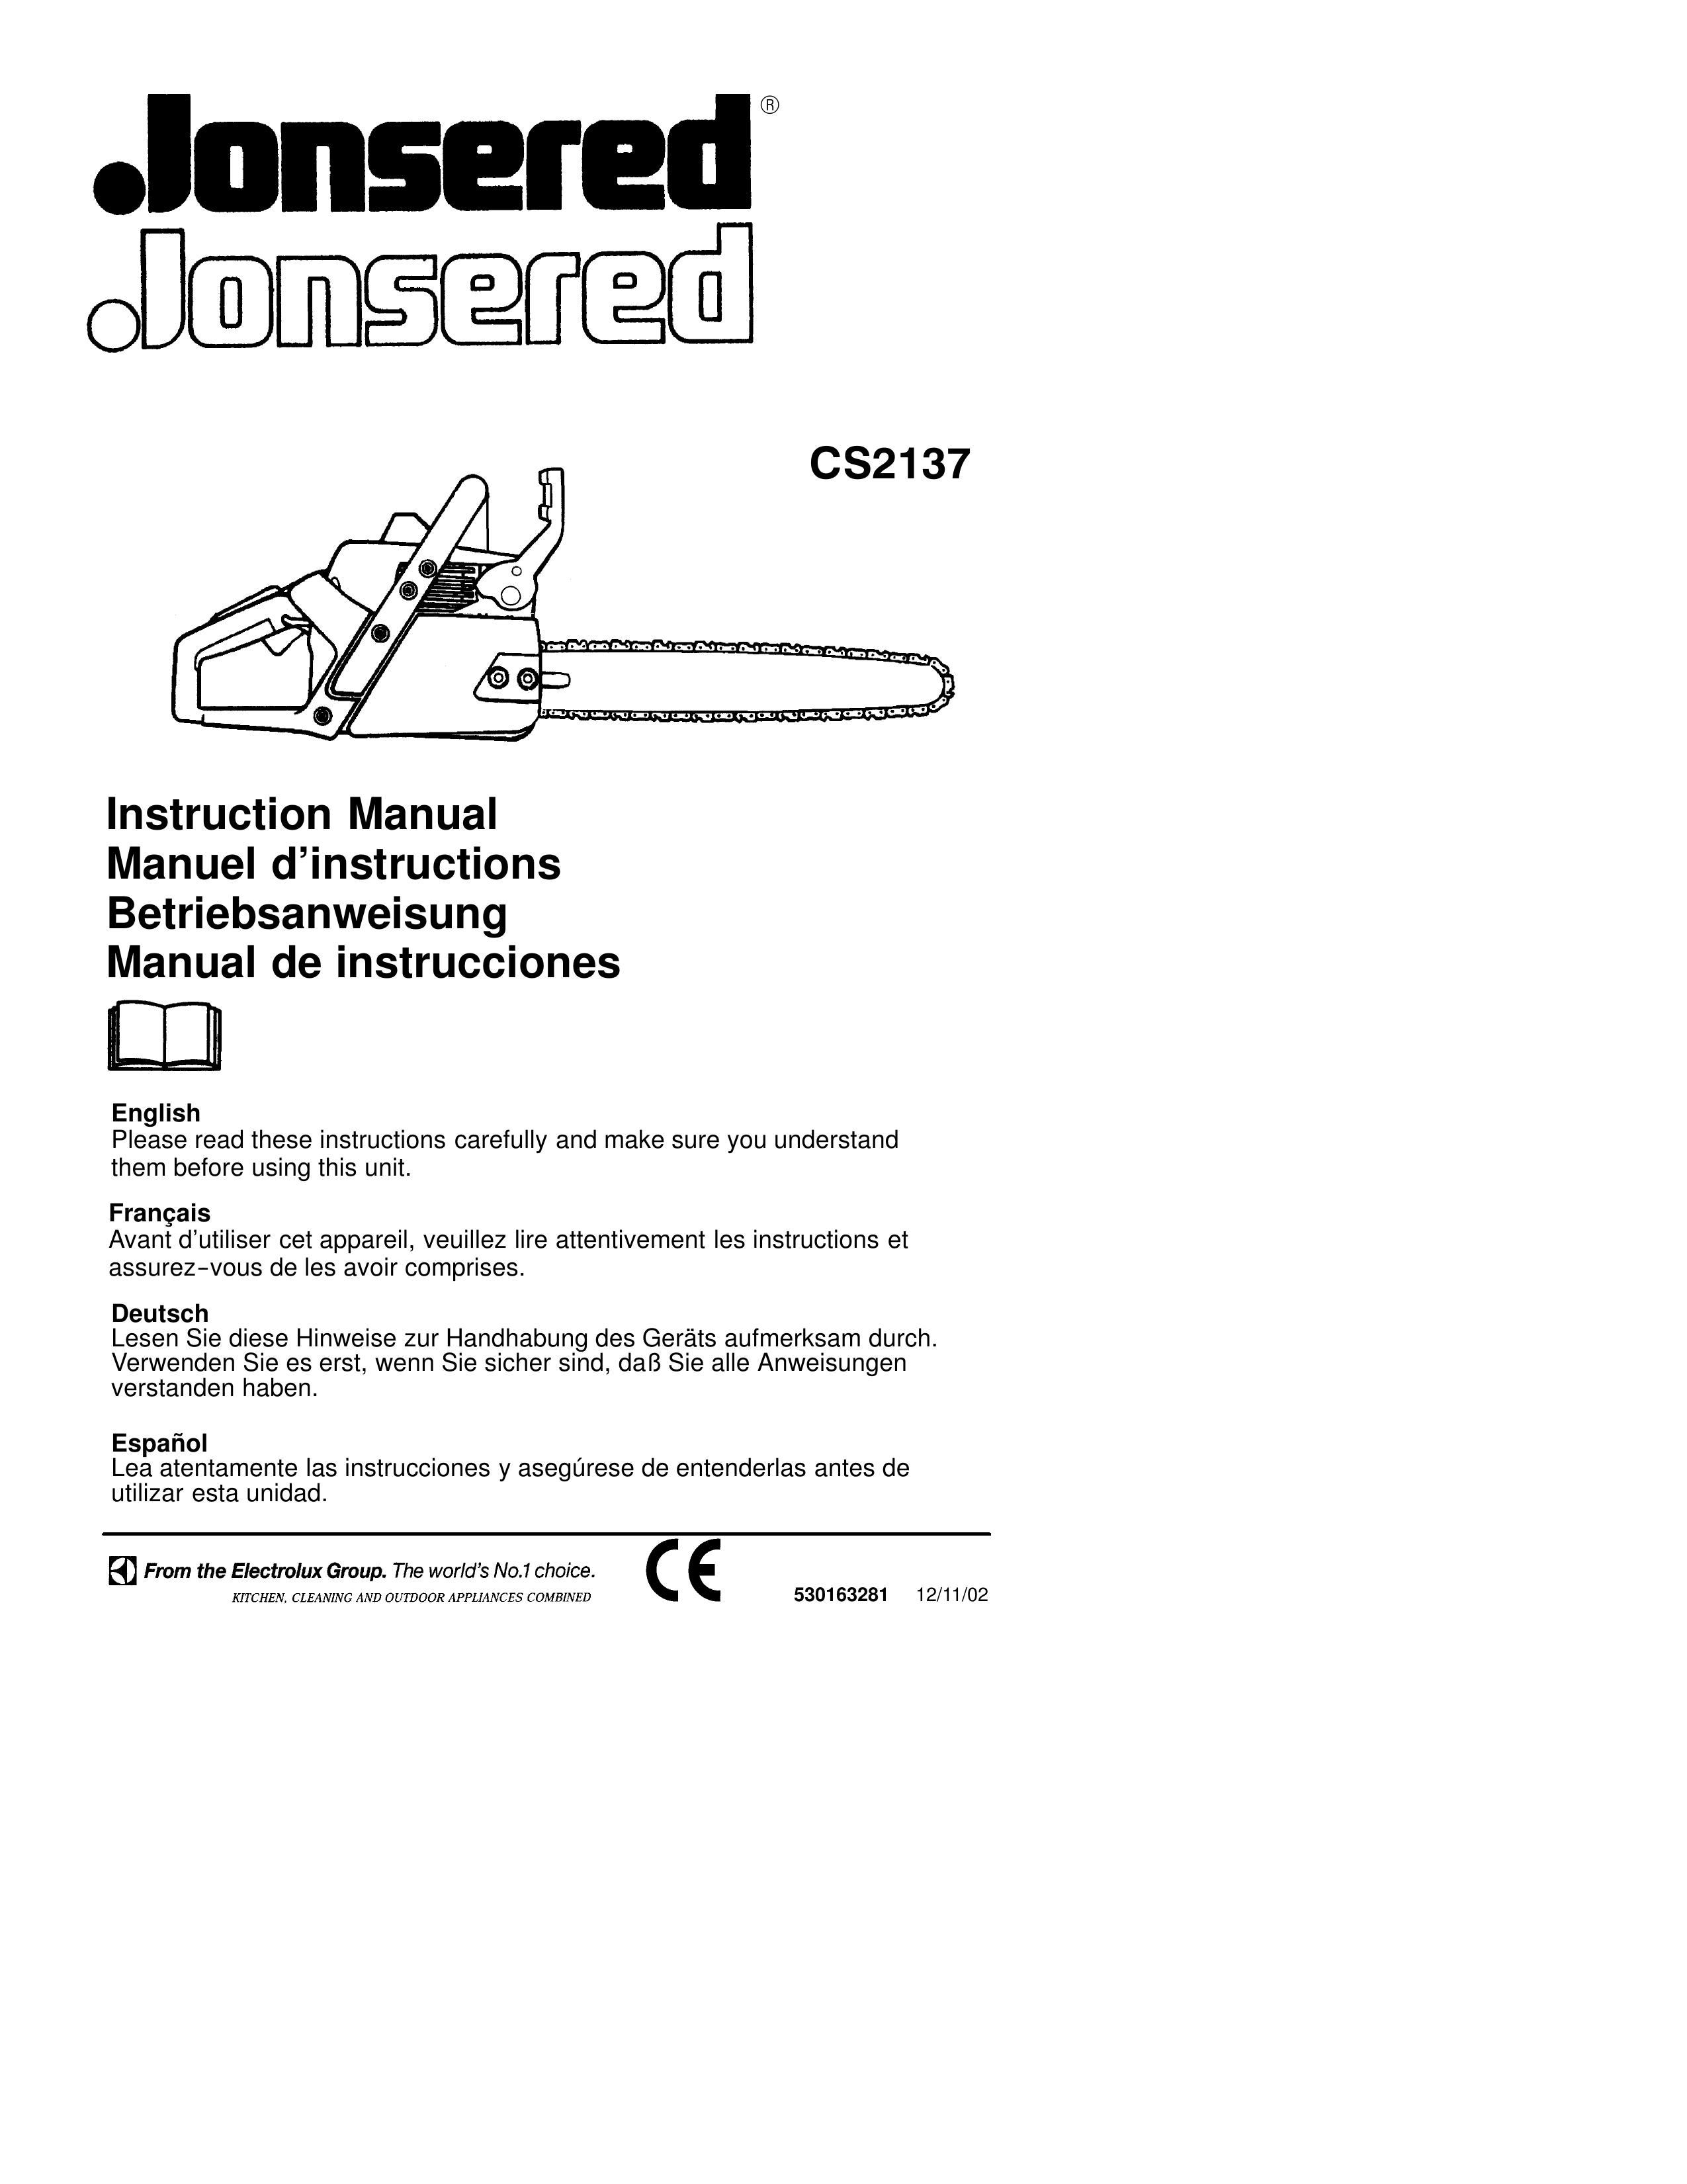 Jonsered CS 2137 Chainsaw User Manual